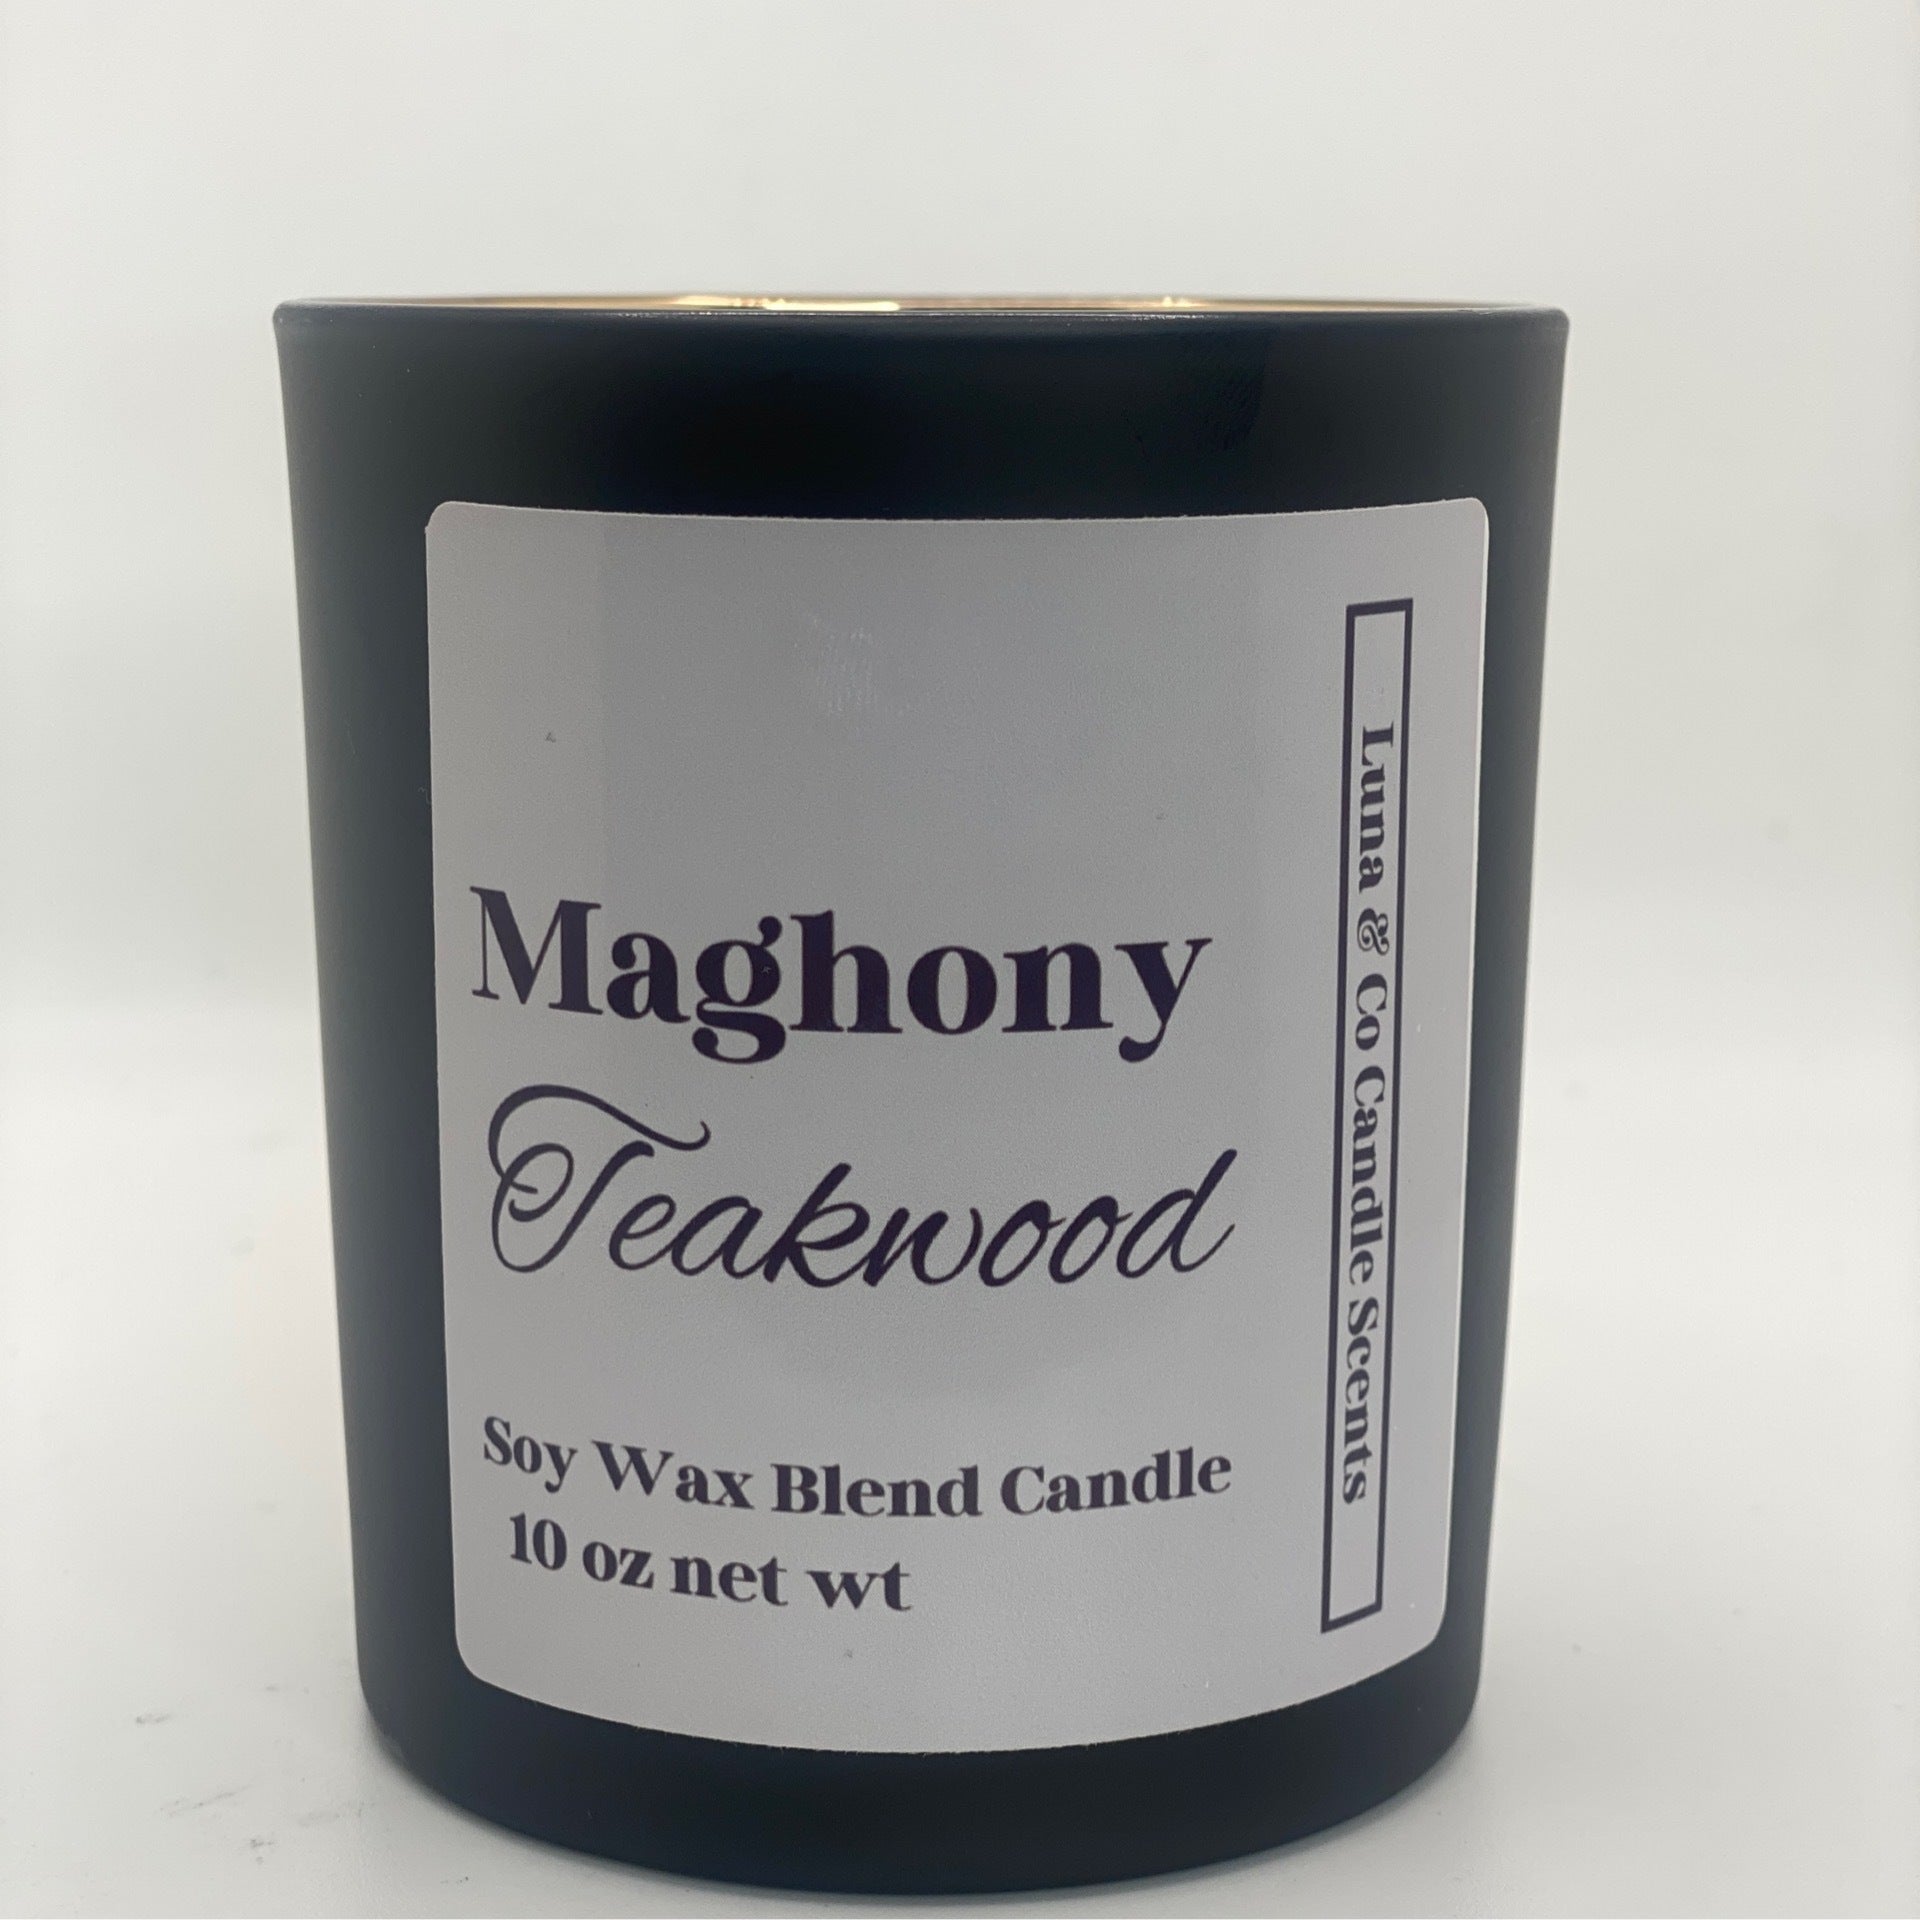 Mahogany Teakwood 10oz